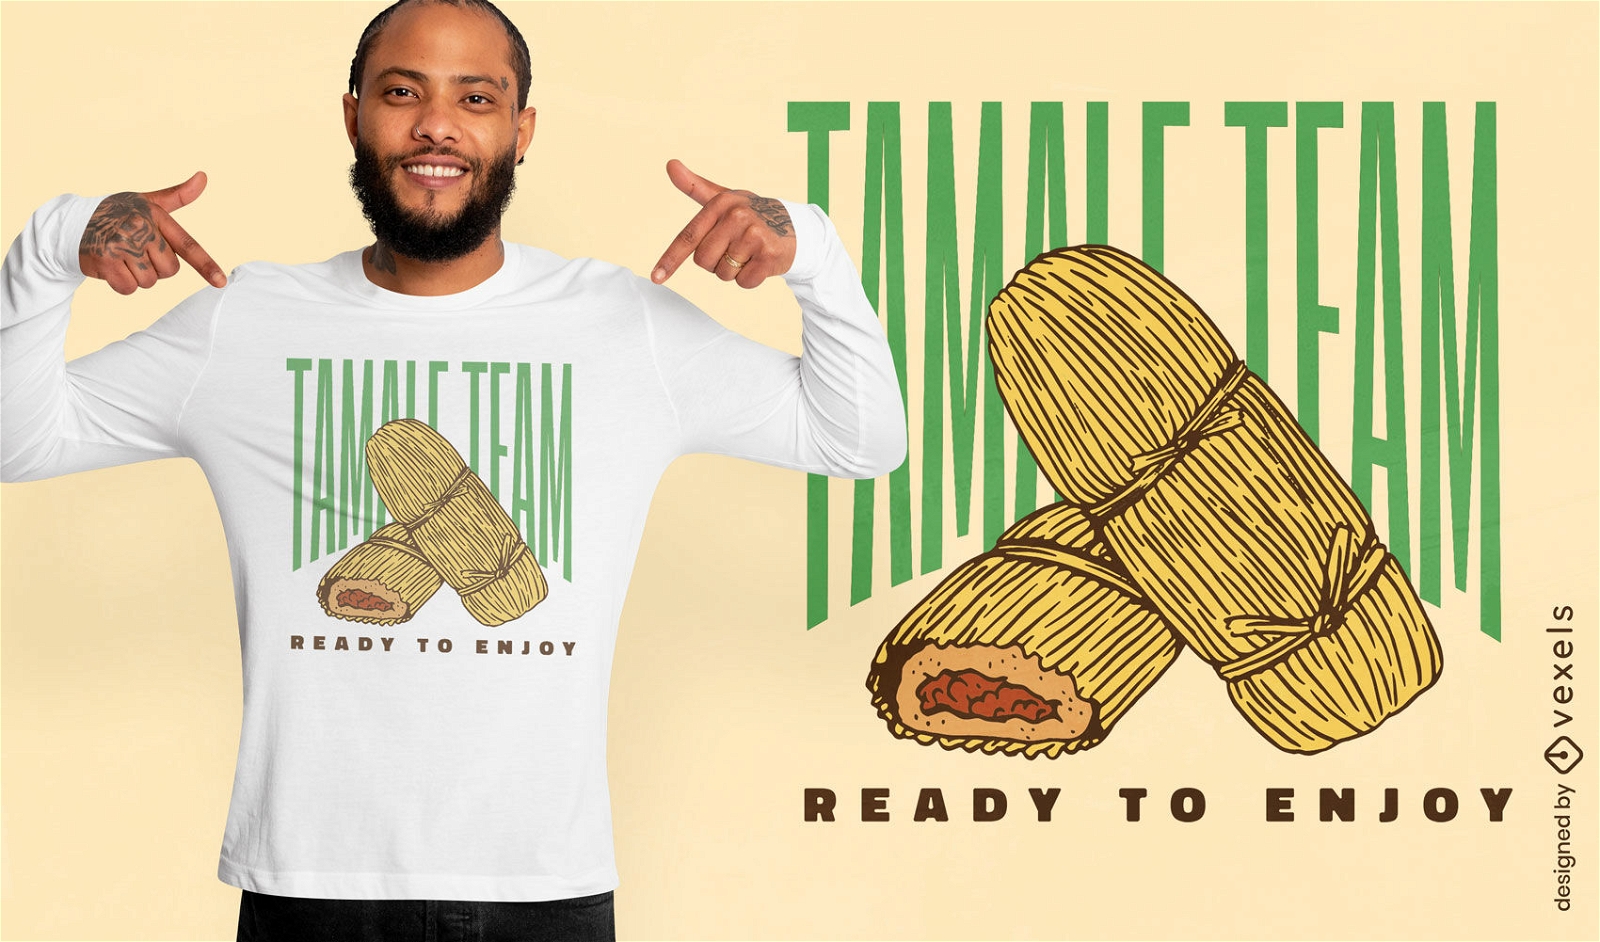 Tamale mexikanisches Lebensmittel-T-Shirt-Design